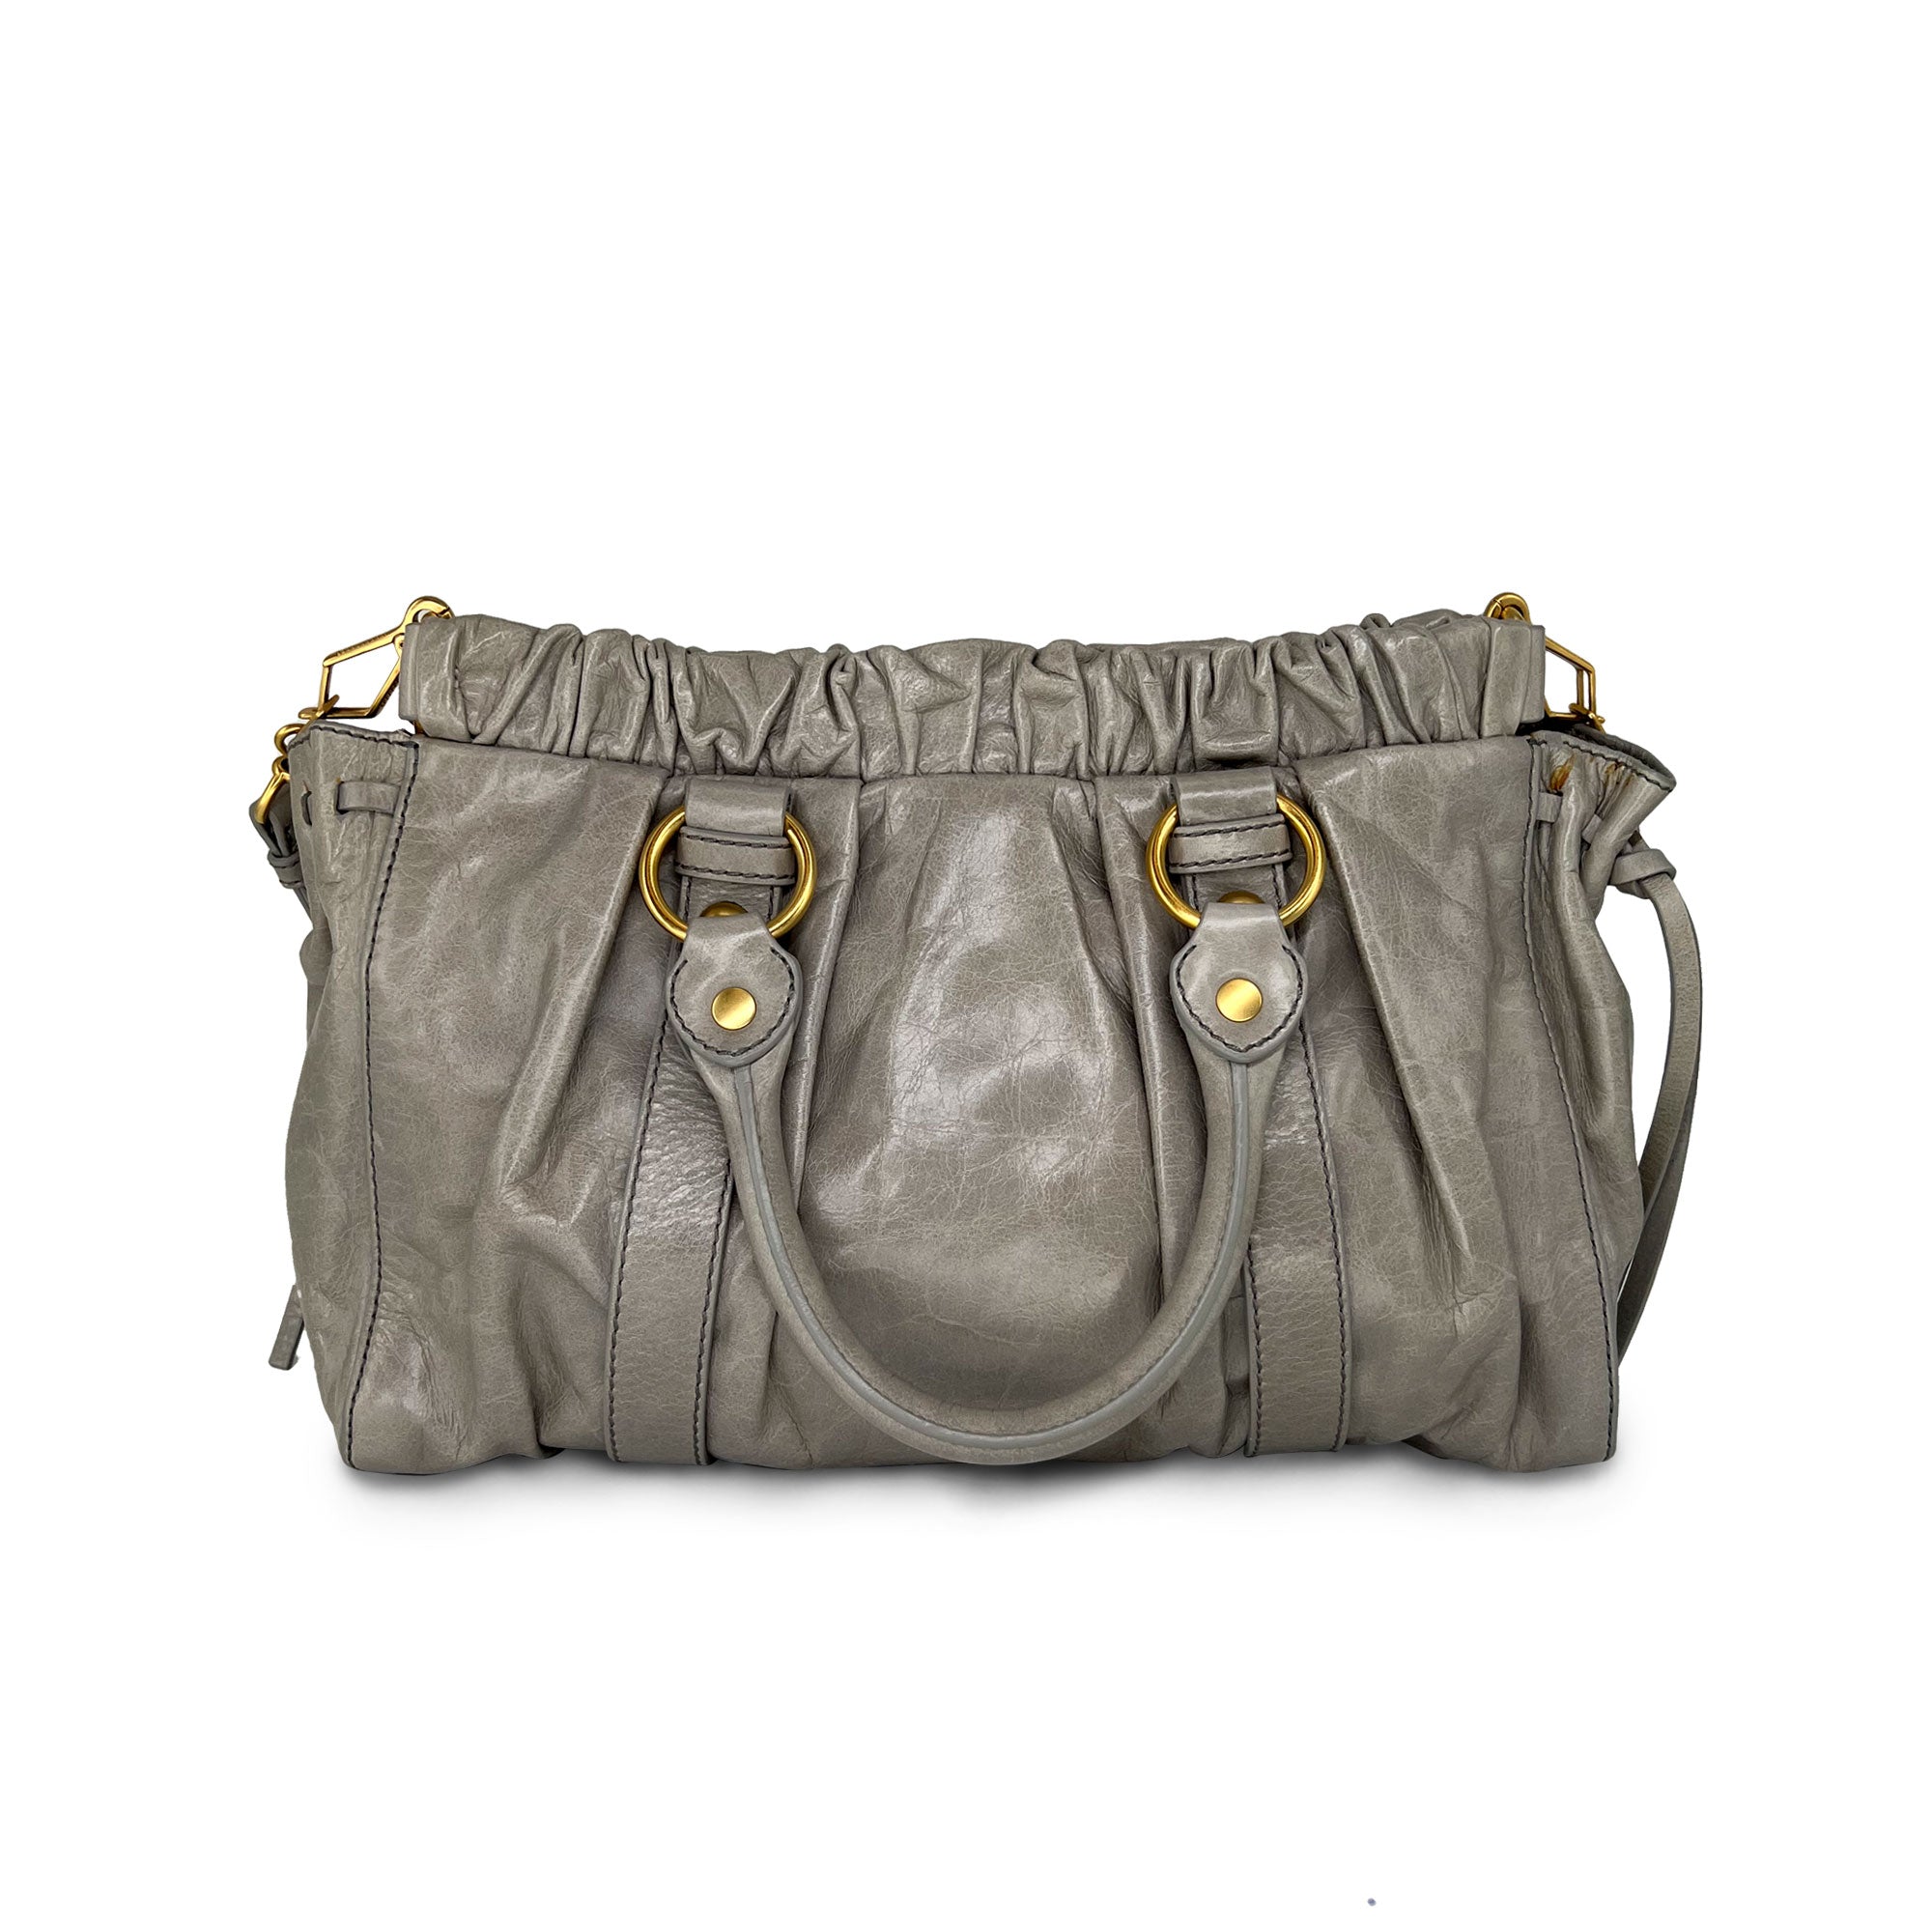 Miu Miu leather grey handbag